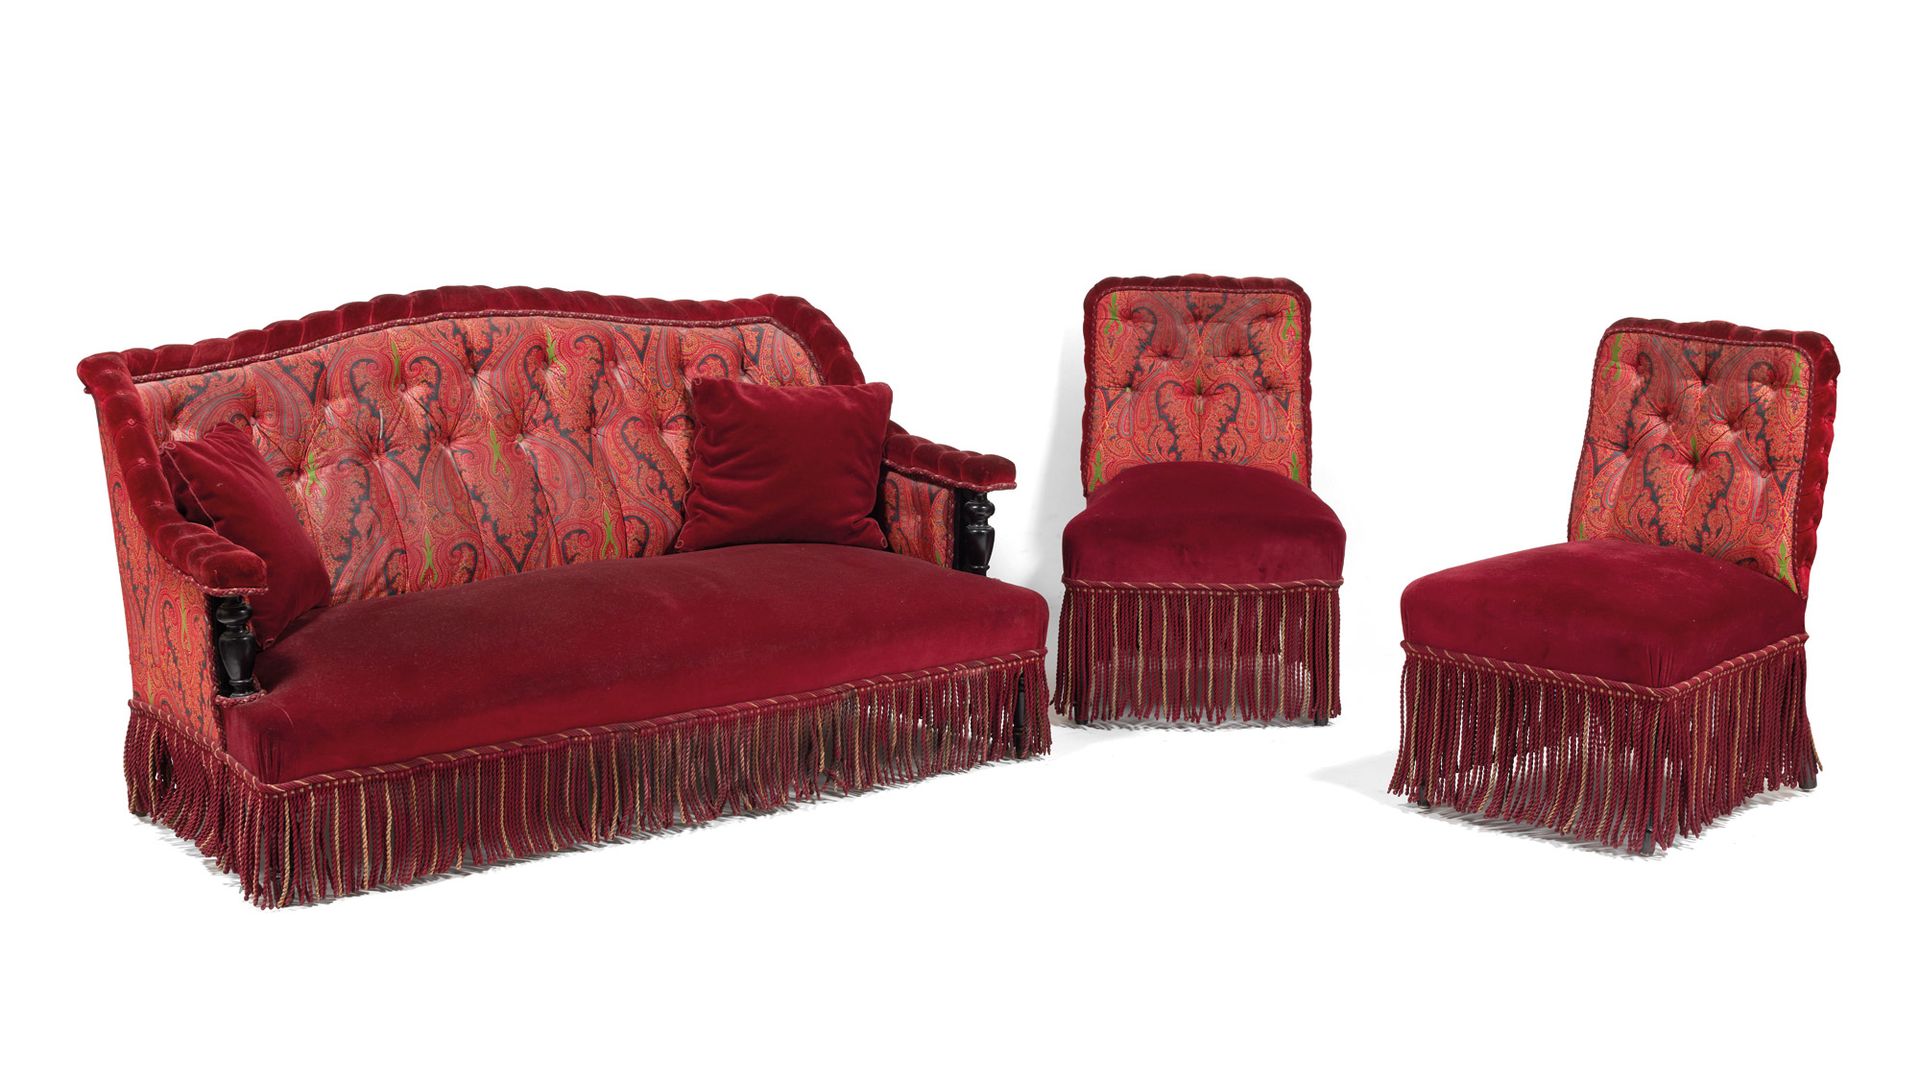 Suite de quatre chauffeuses et un canapé 由四张扶手椅和一张沙发组成的套房

黑色漆面和翻转的腿，座椅用深红色天鹅绒装饰&hellip;